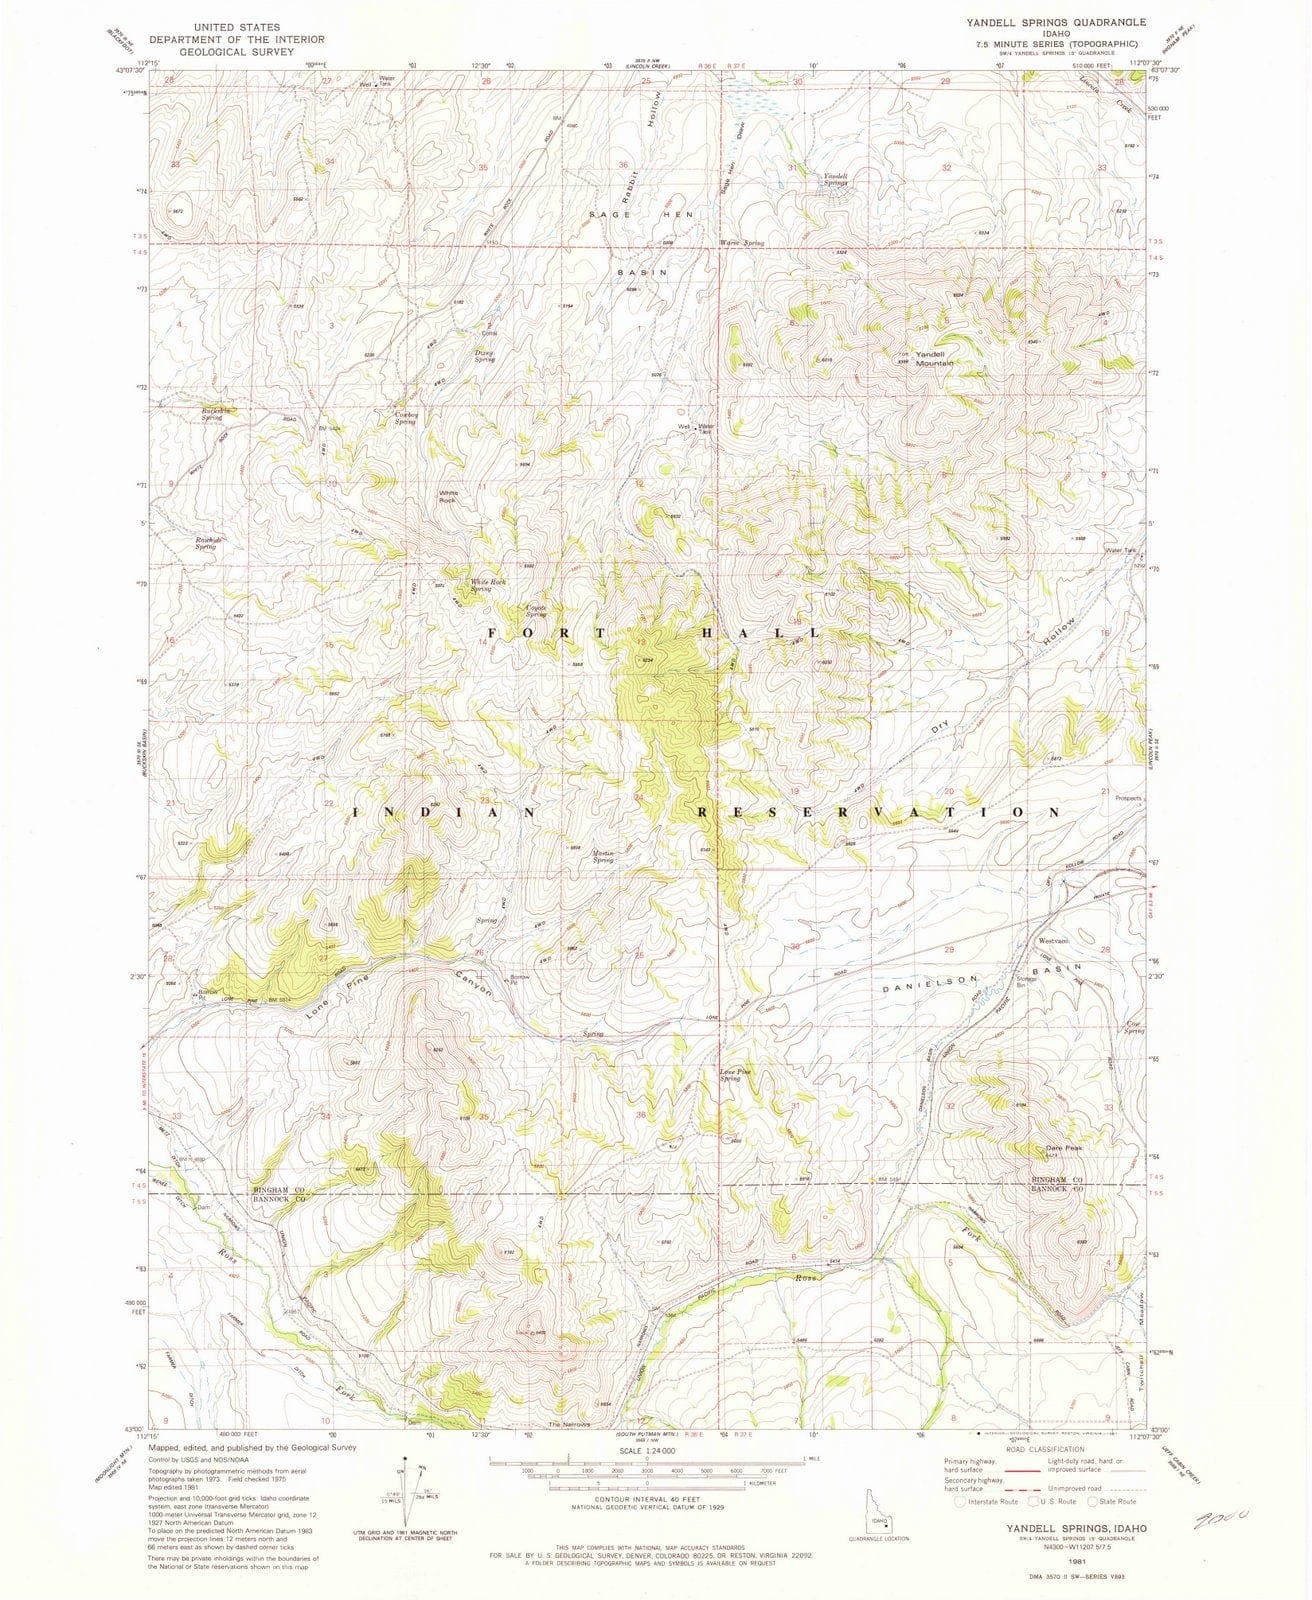 1981 Yandell Springs, ID - Idaho - USGS Topographic Map